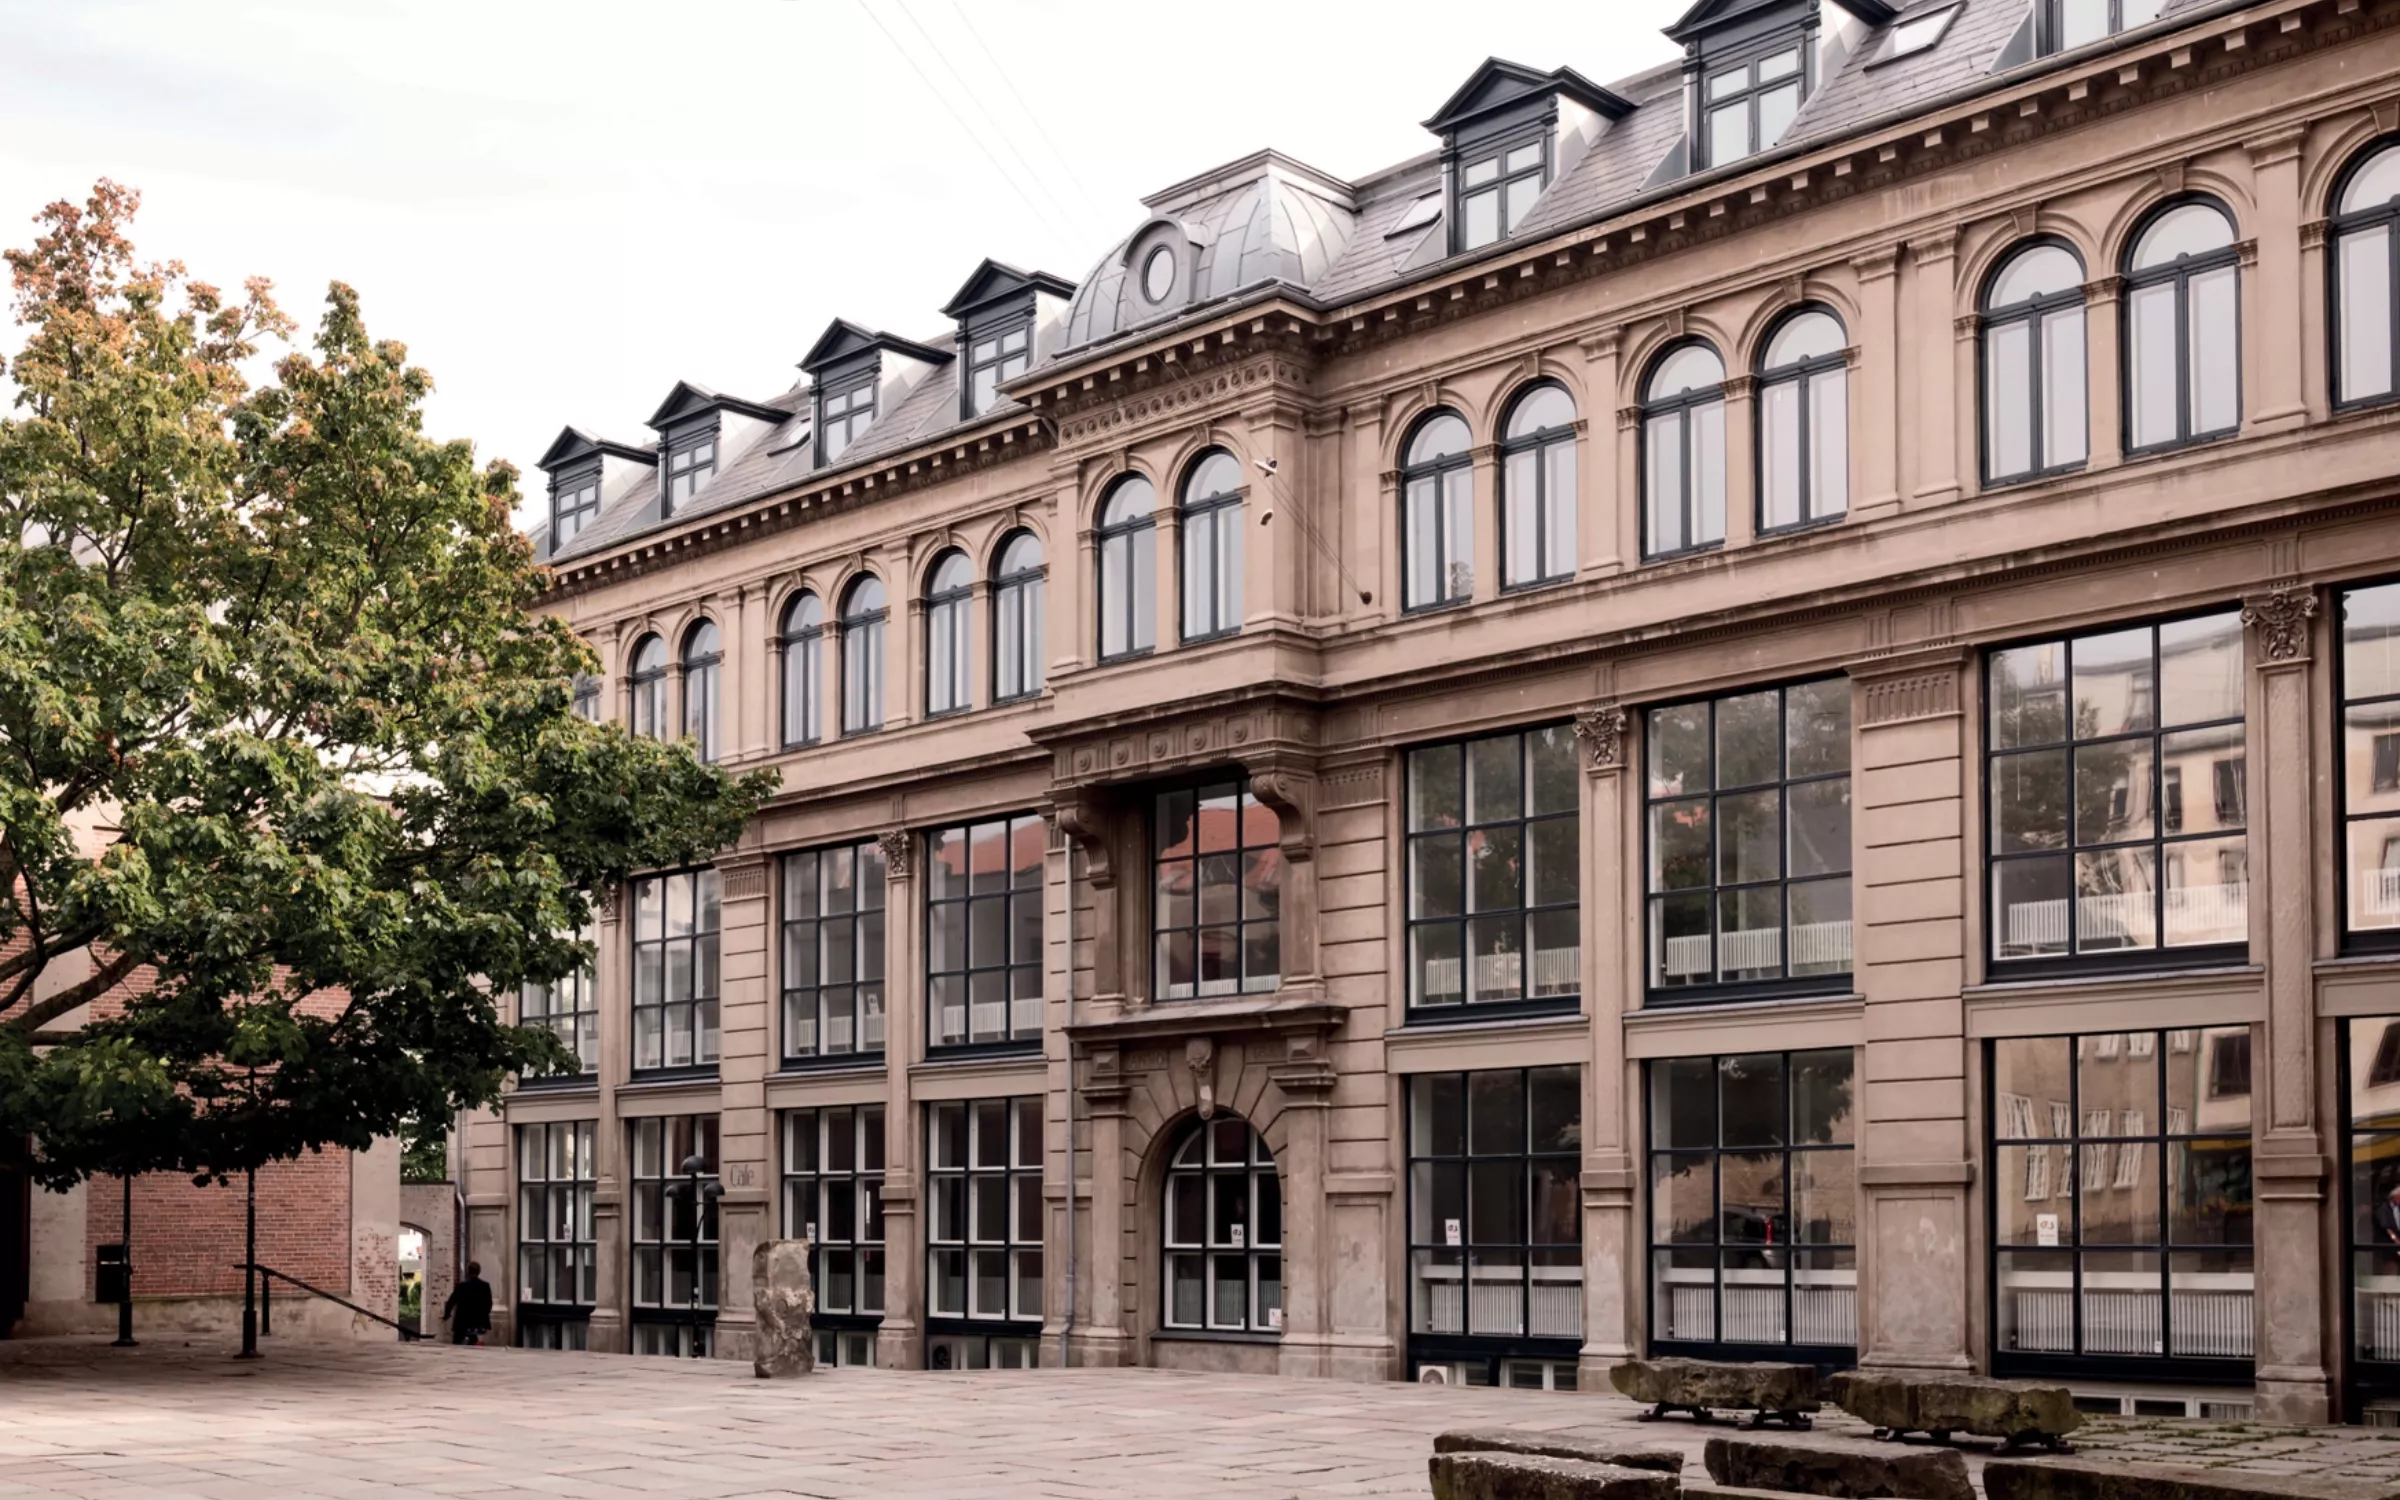 History and modernity meet in Copenhagen’s Trinity Quarter